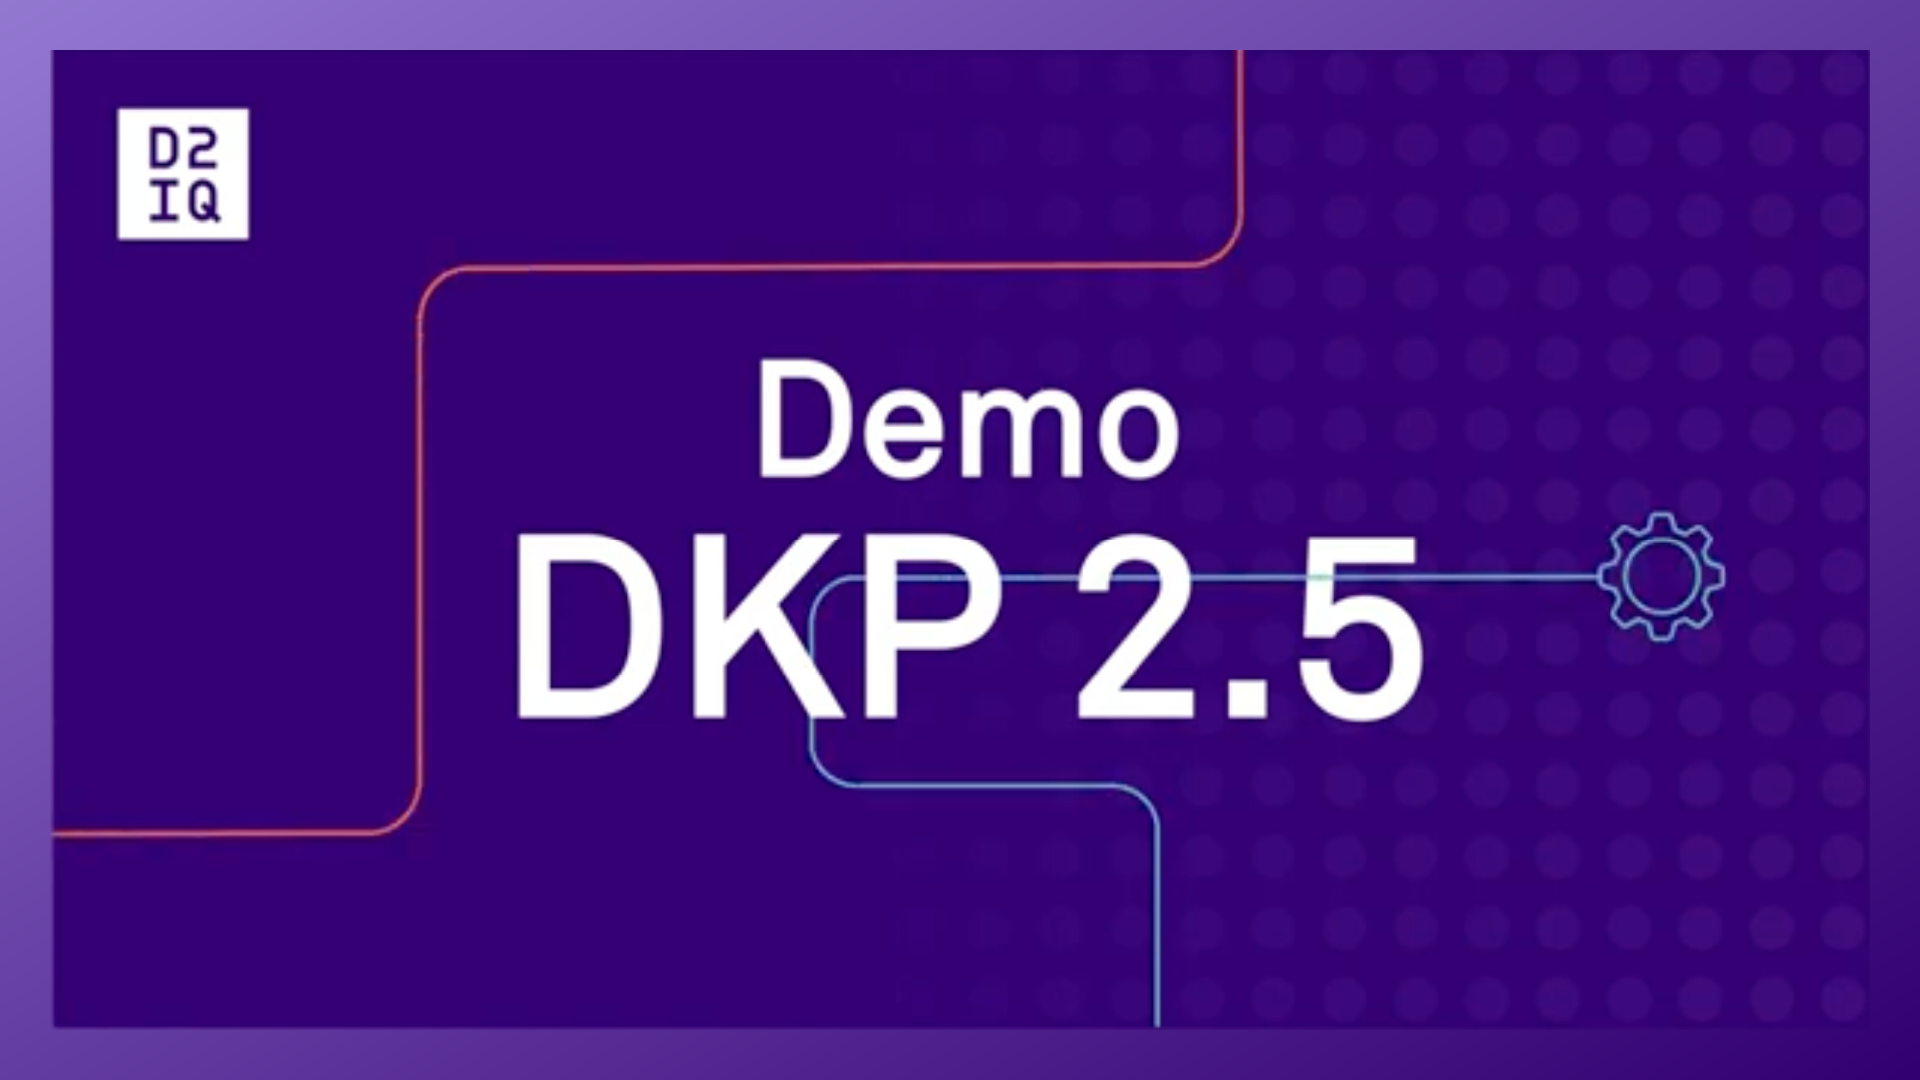 DKP 2.5 Demo